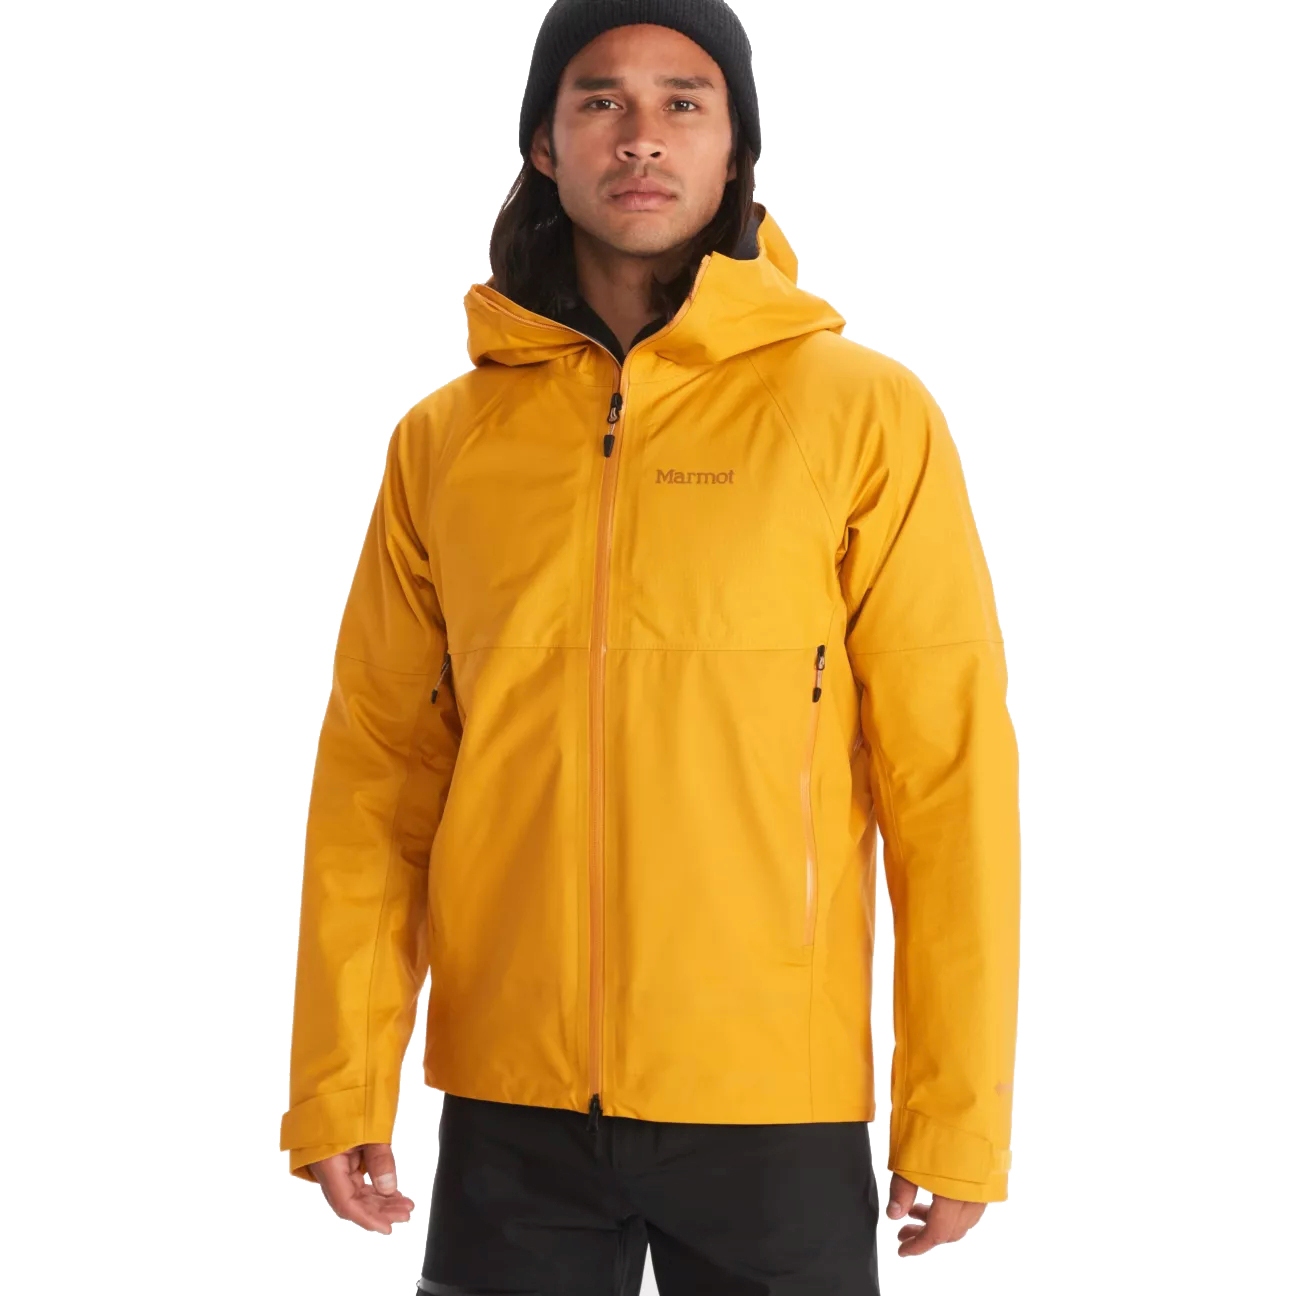 Productfoto van Marmot Mitre Peak GORE-TEX Jas - yellow gold